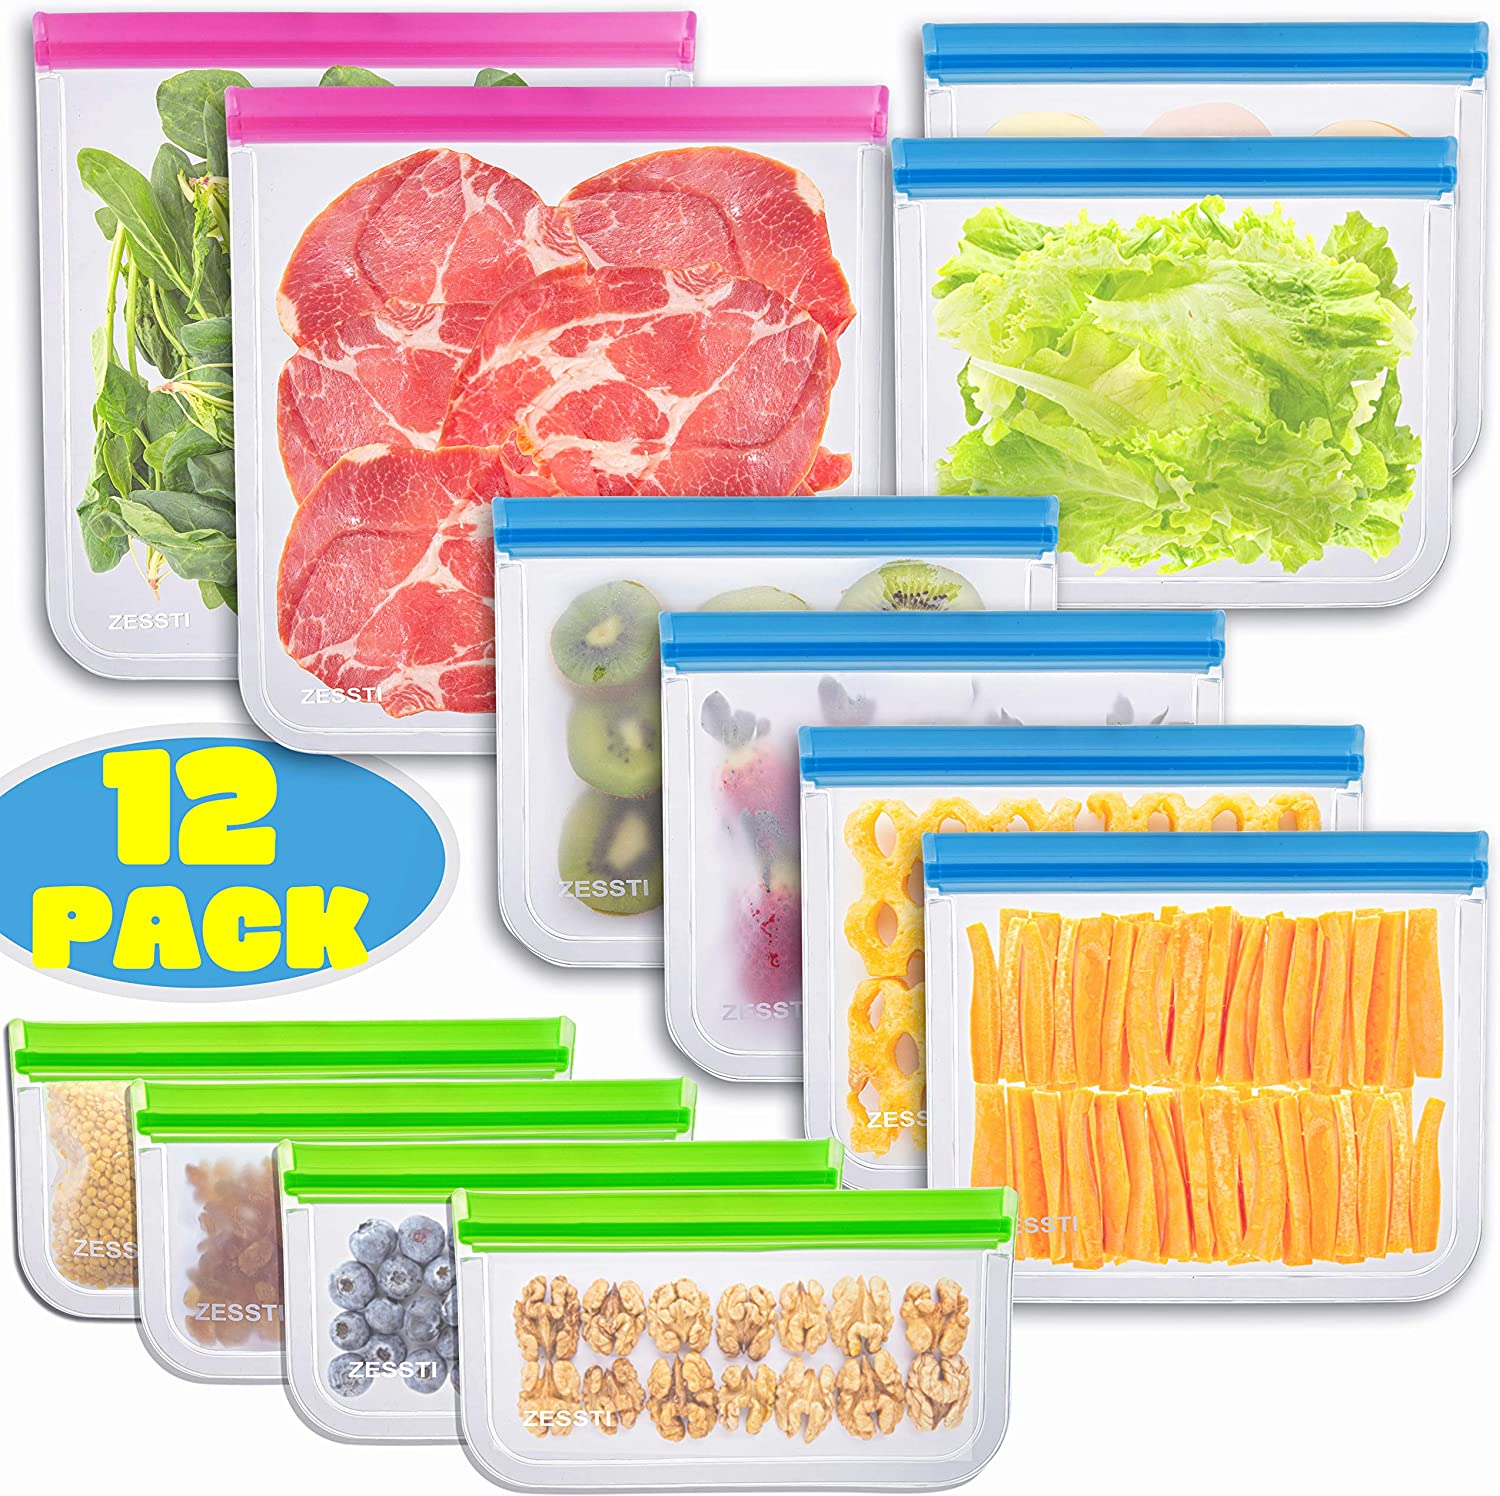 VEHHE 20 Pack Reusable Storage Bags (2 Gallon Ziplock Bags + 6 Reusable  Snack Bags + 6 Reusable Freezer Bags + 6 Sandwich Bags) Leakproof Food Bags